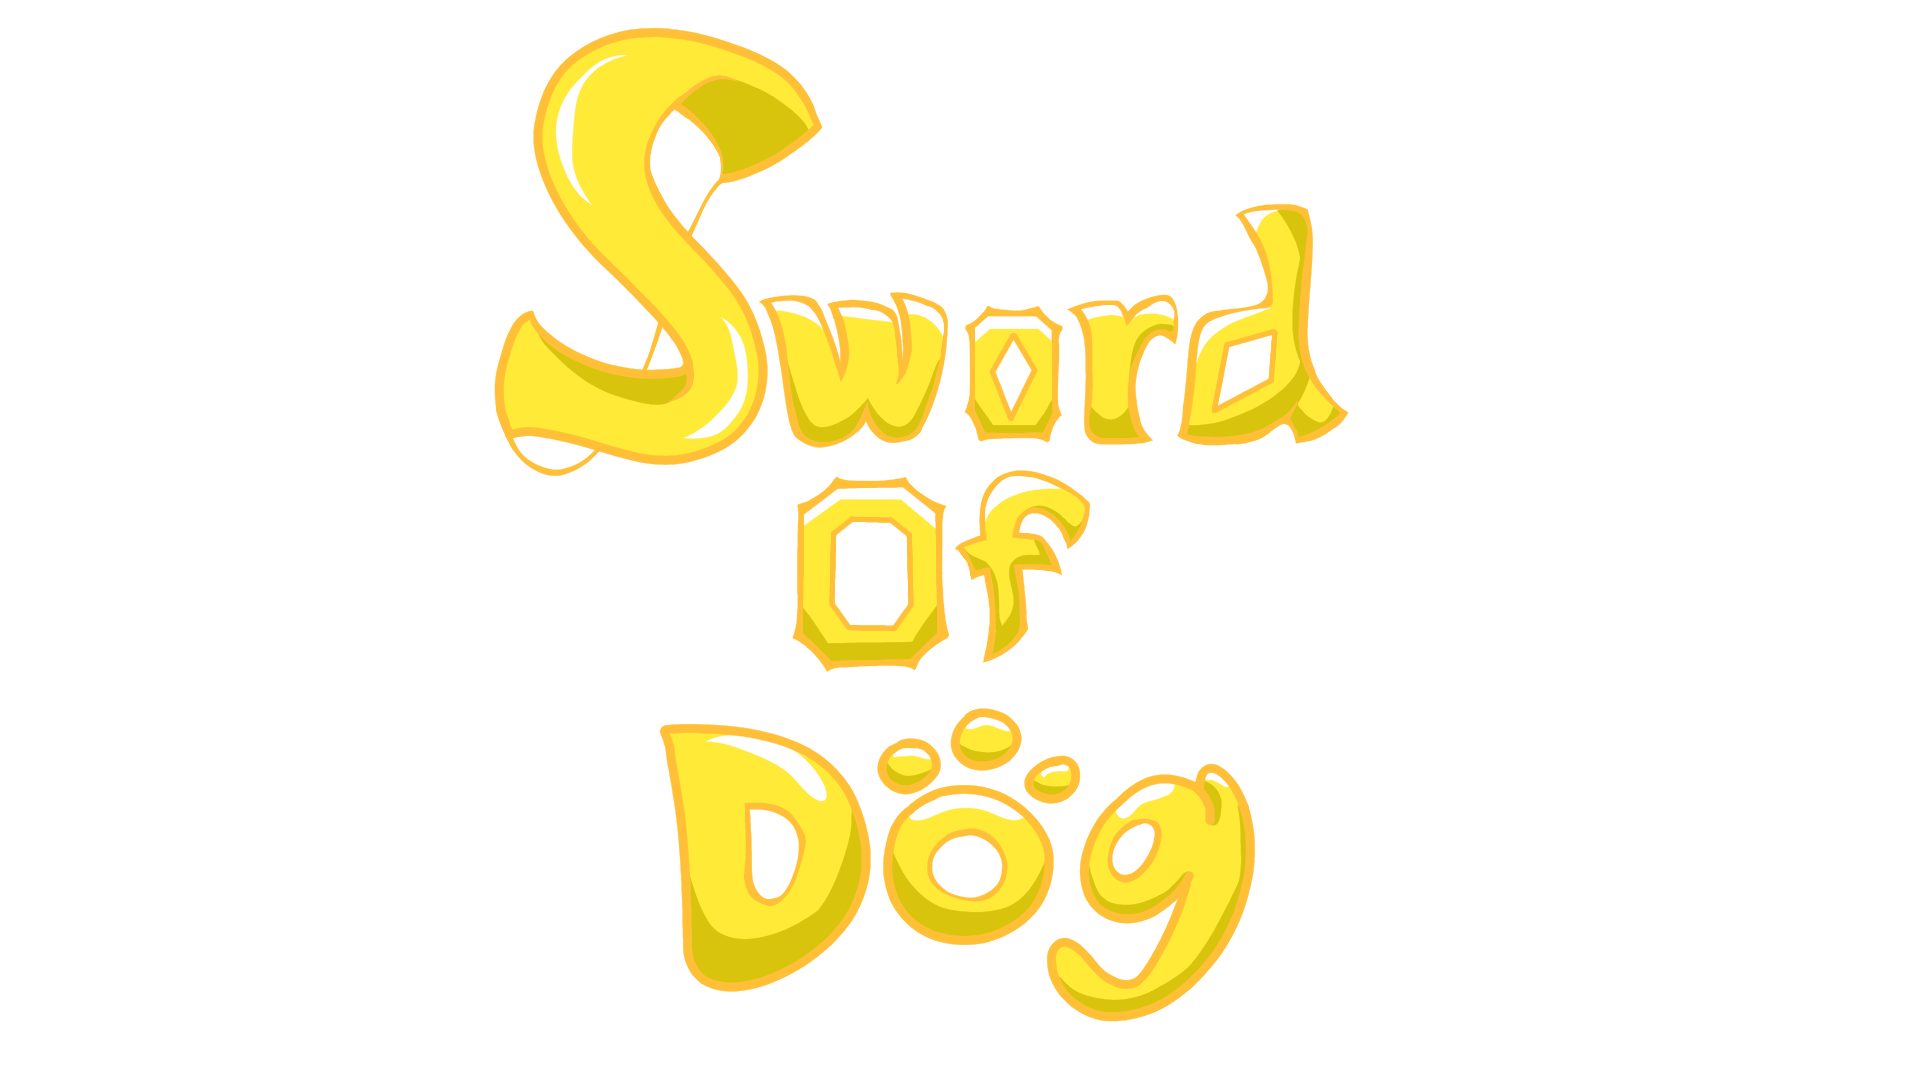 Sword of Dog